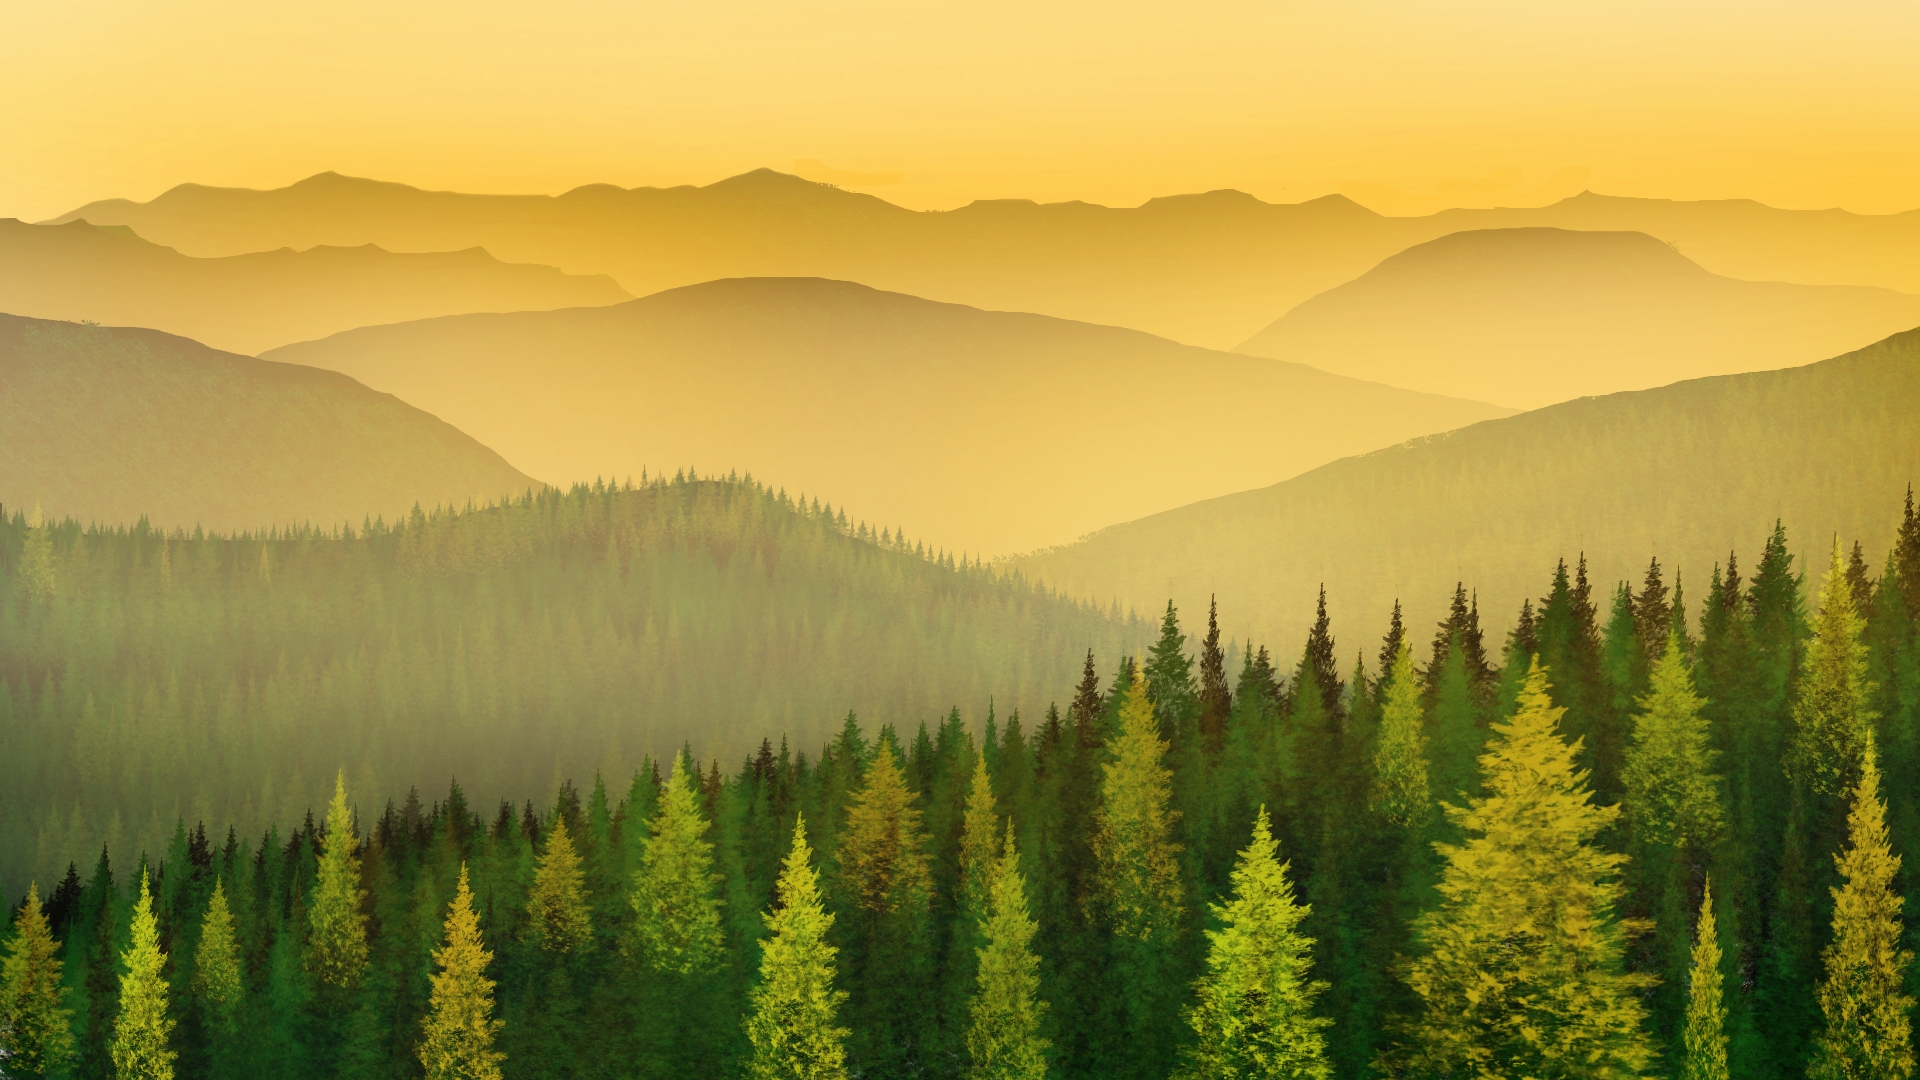 Digital Painting Digital Art Nature Landscape Trees Mountains 1920x1080